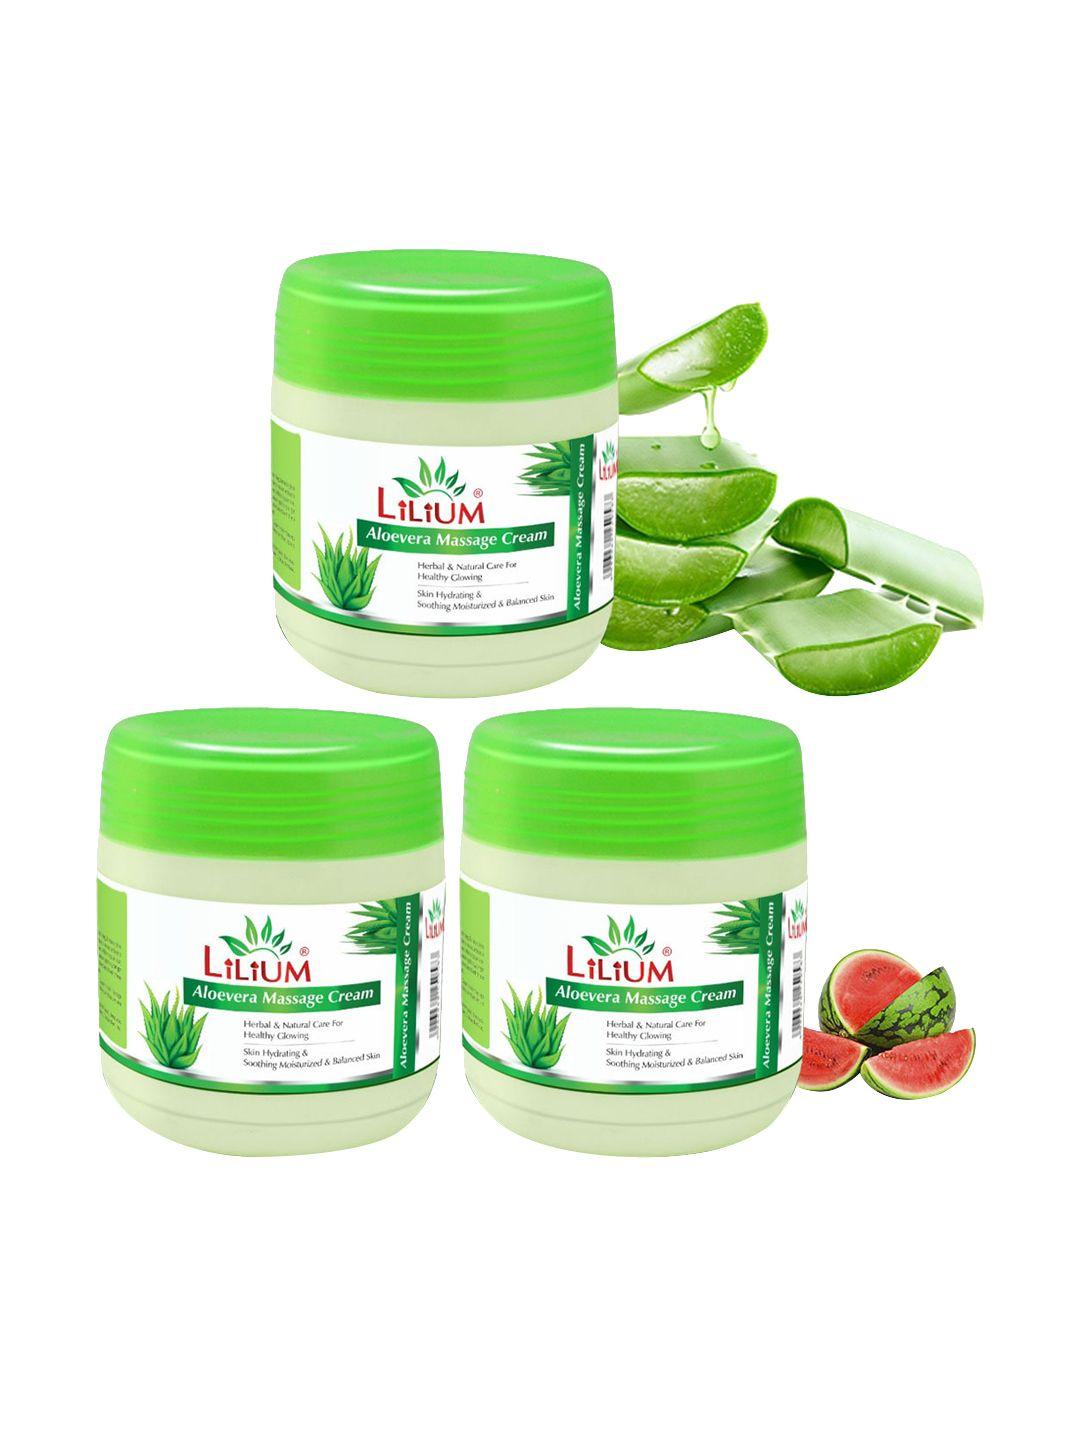 lilium set of 3 herbal & natural aloevera massage cream - 500 ml each